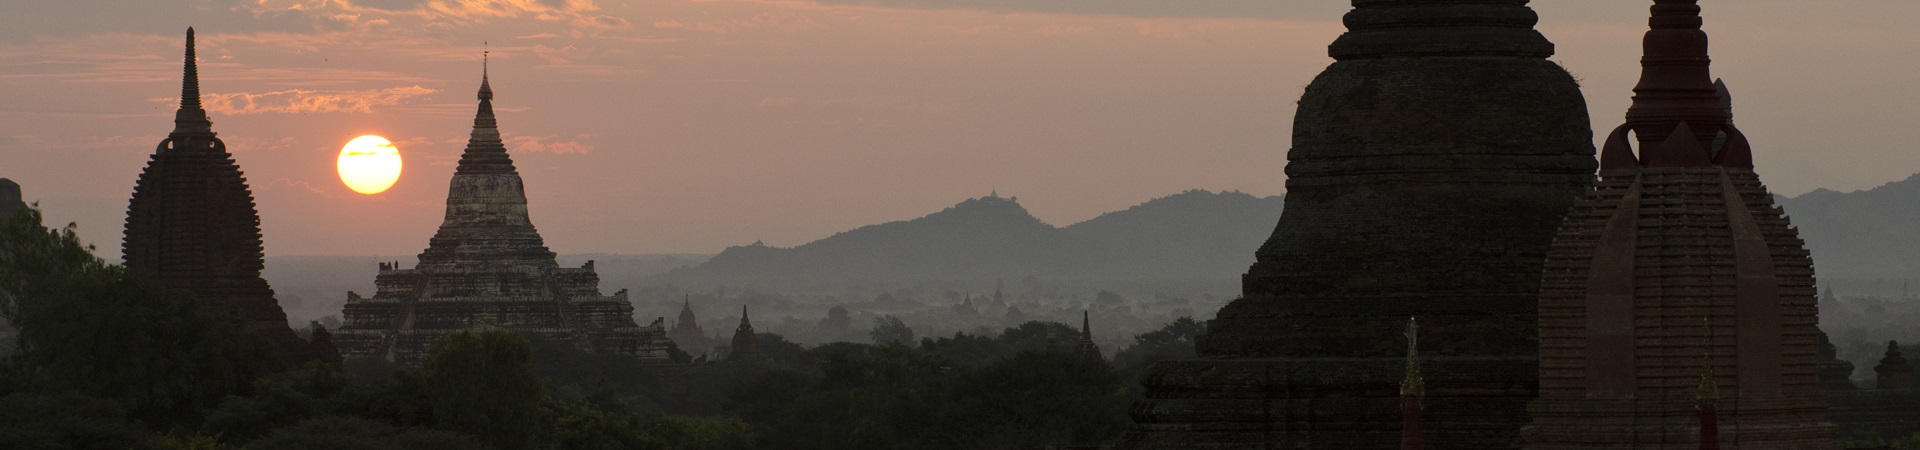 Image of Archaeology Tour of Bagan